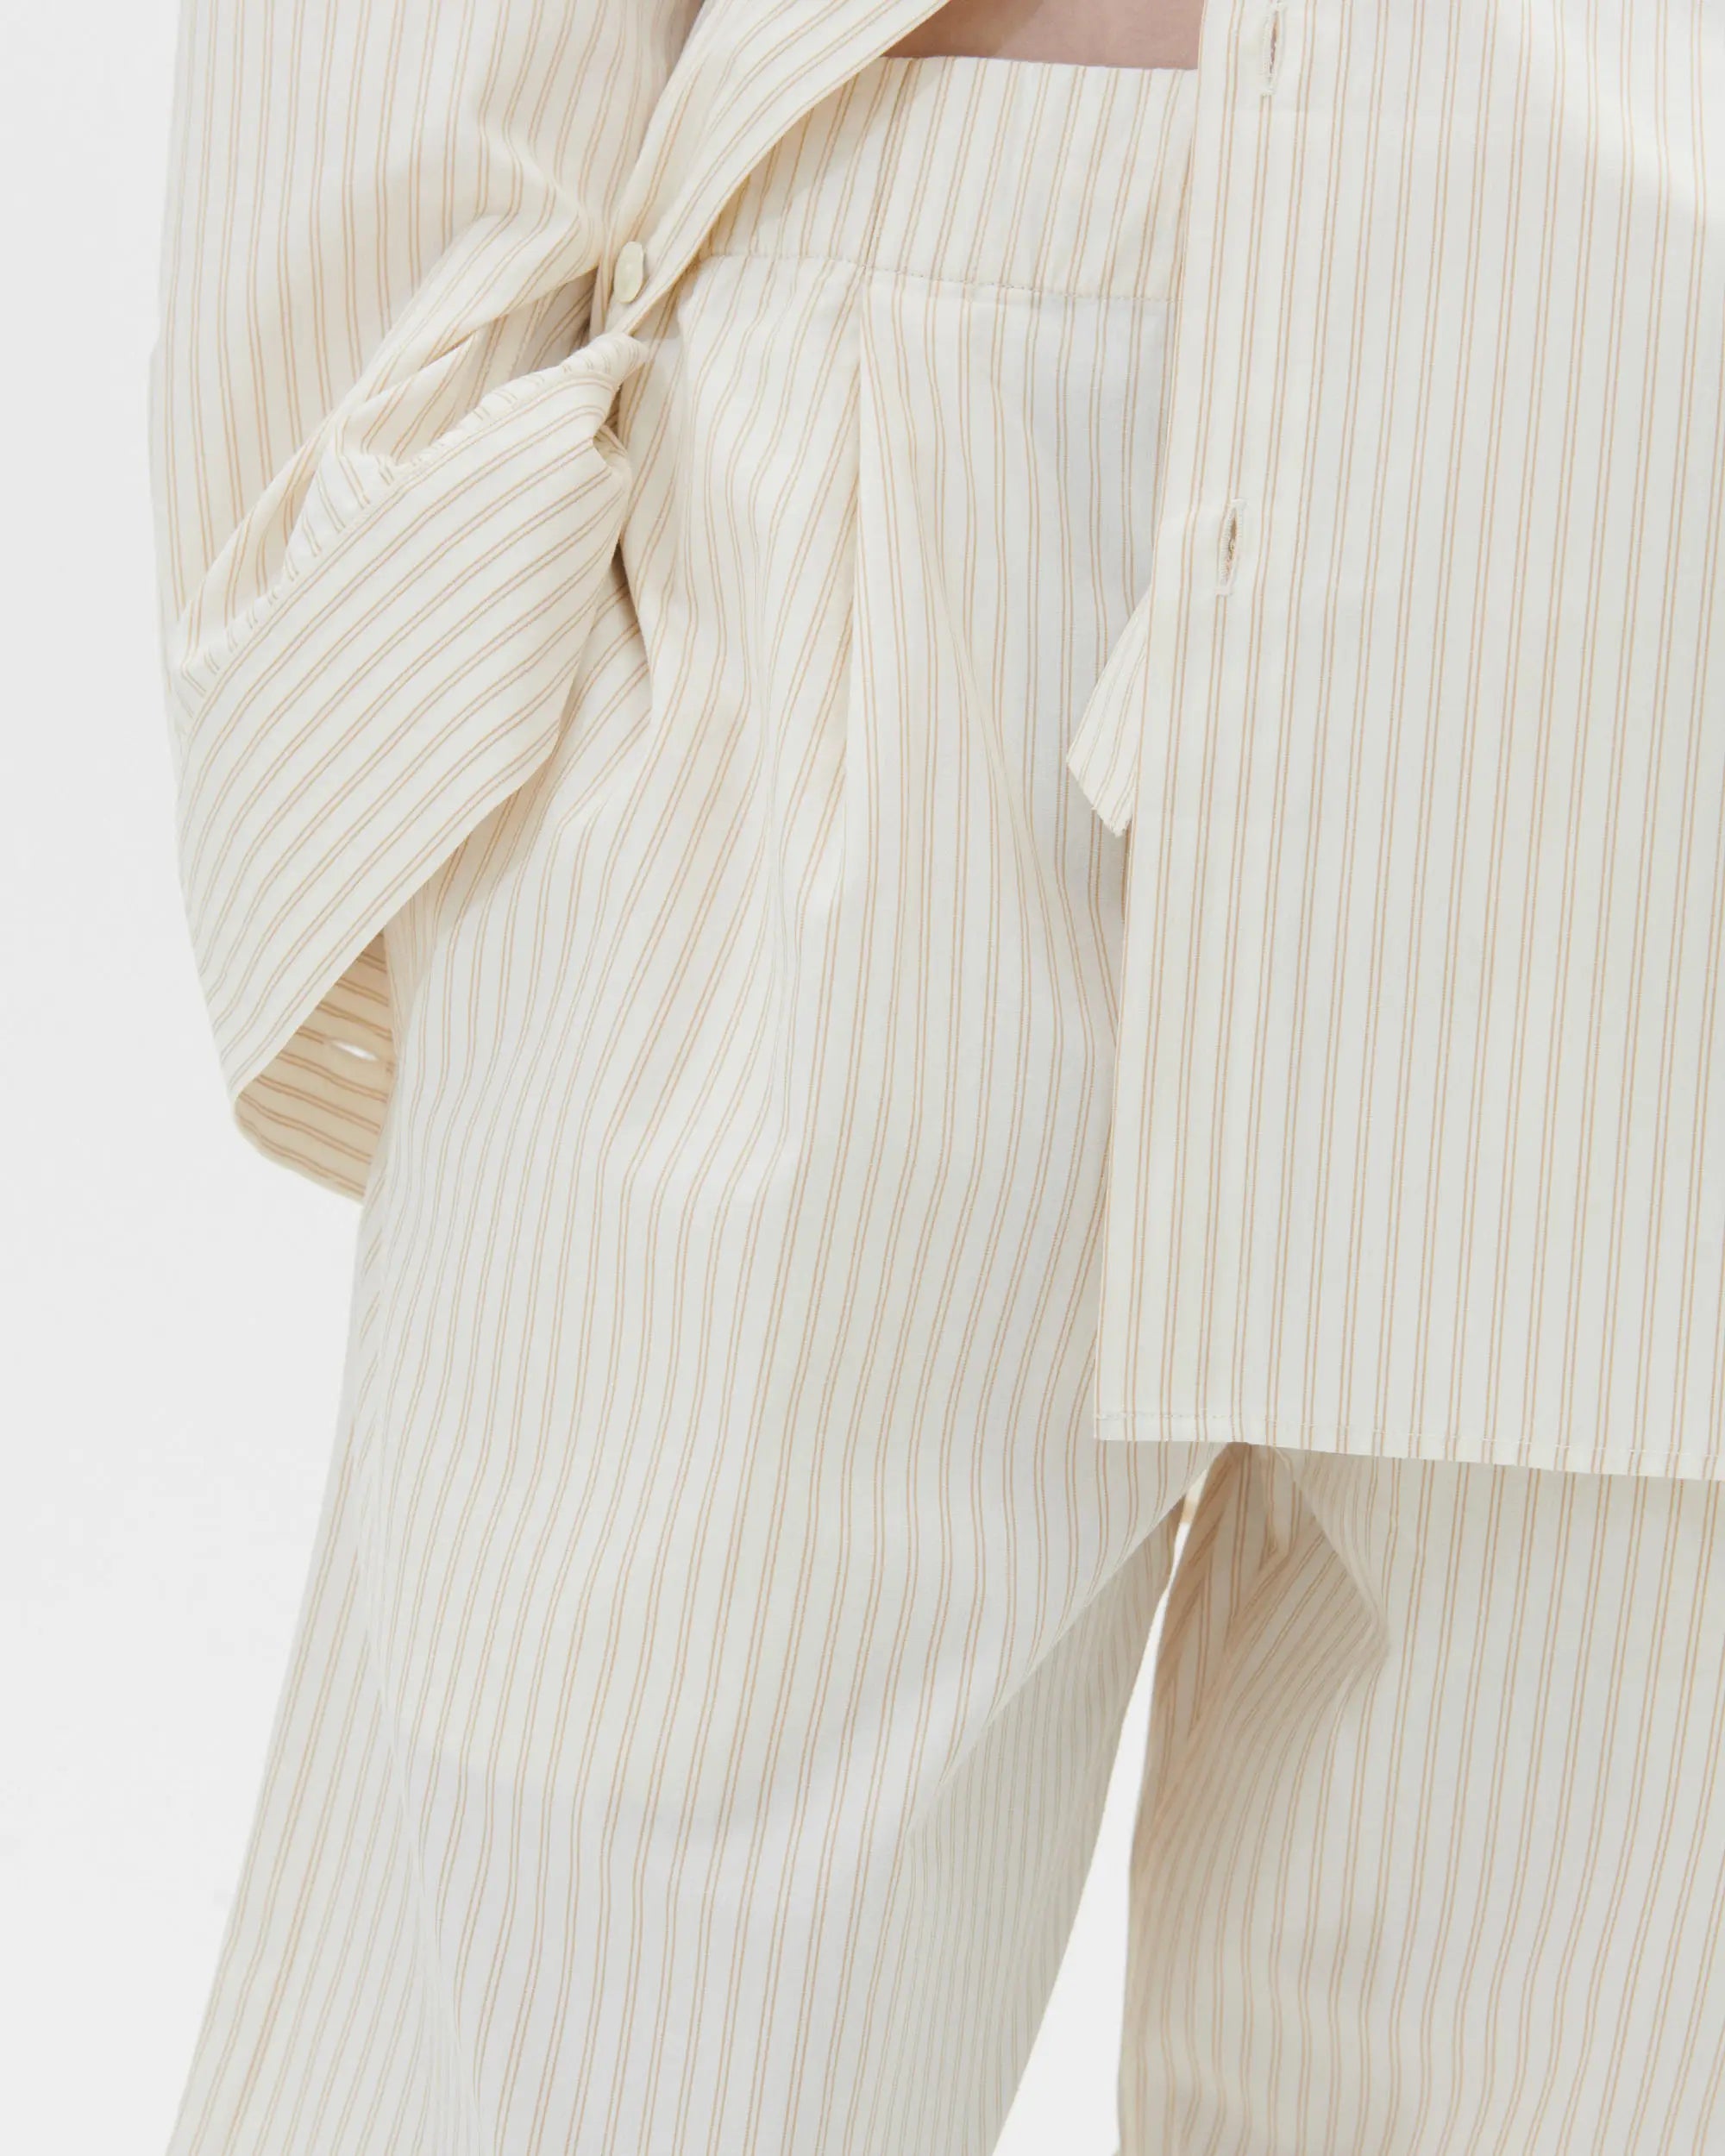 Tekla x Birkenstock Cotton Pants - Wheat Stripes